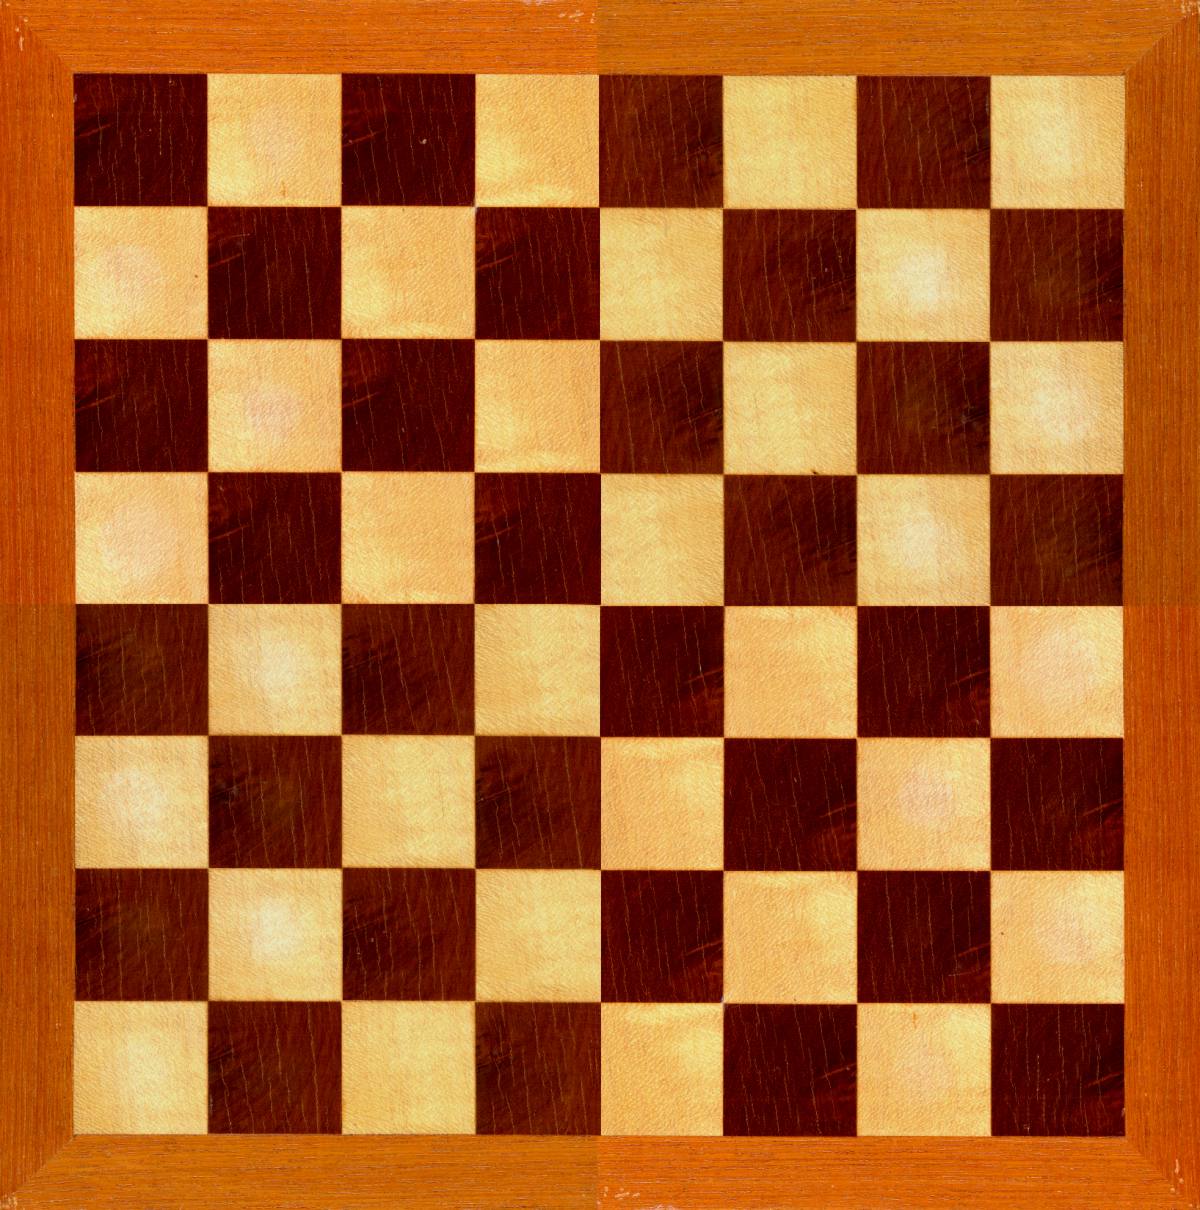 975_16302_chessboard.jpg